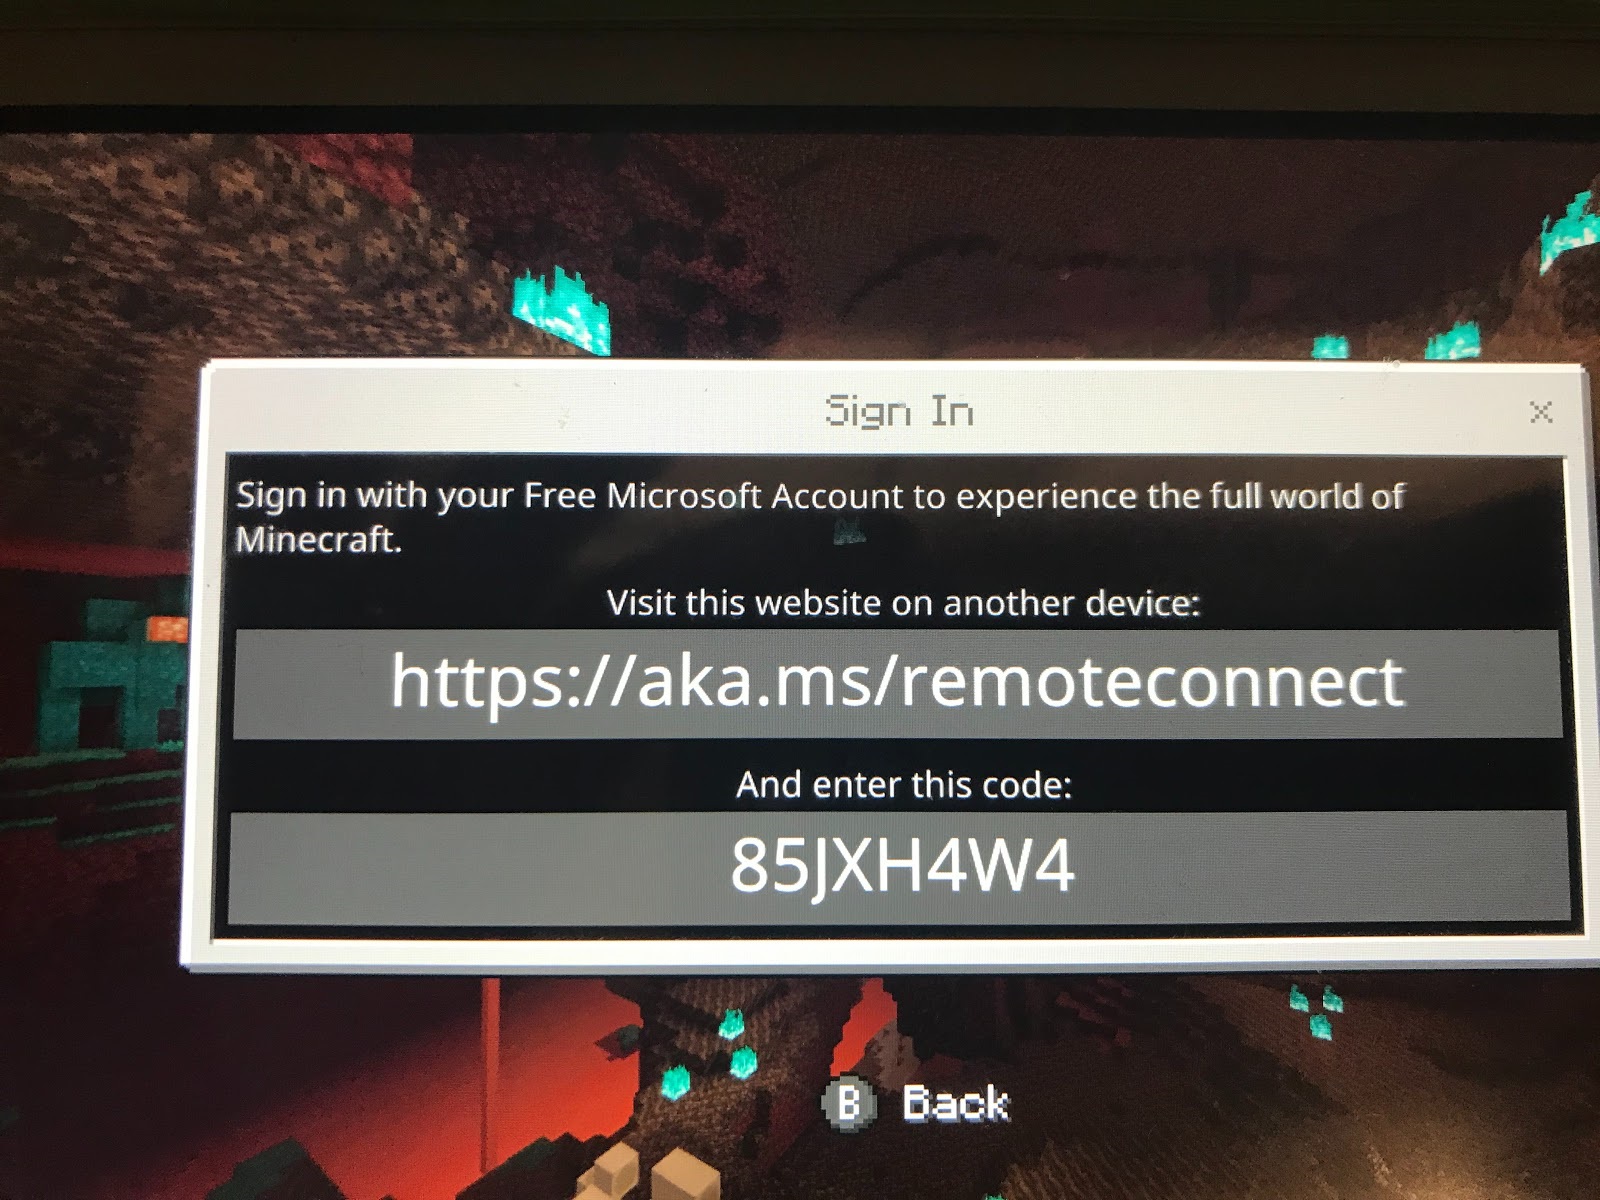 Minecraft on Nintendo switch family account - Microsoft Community